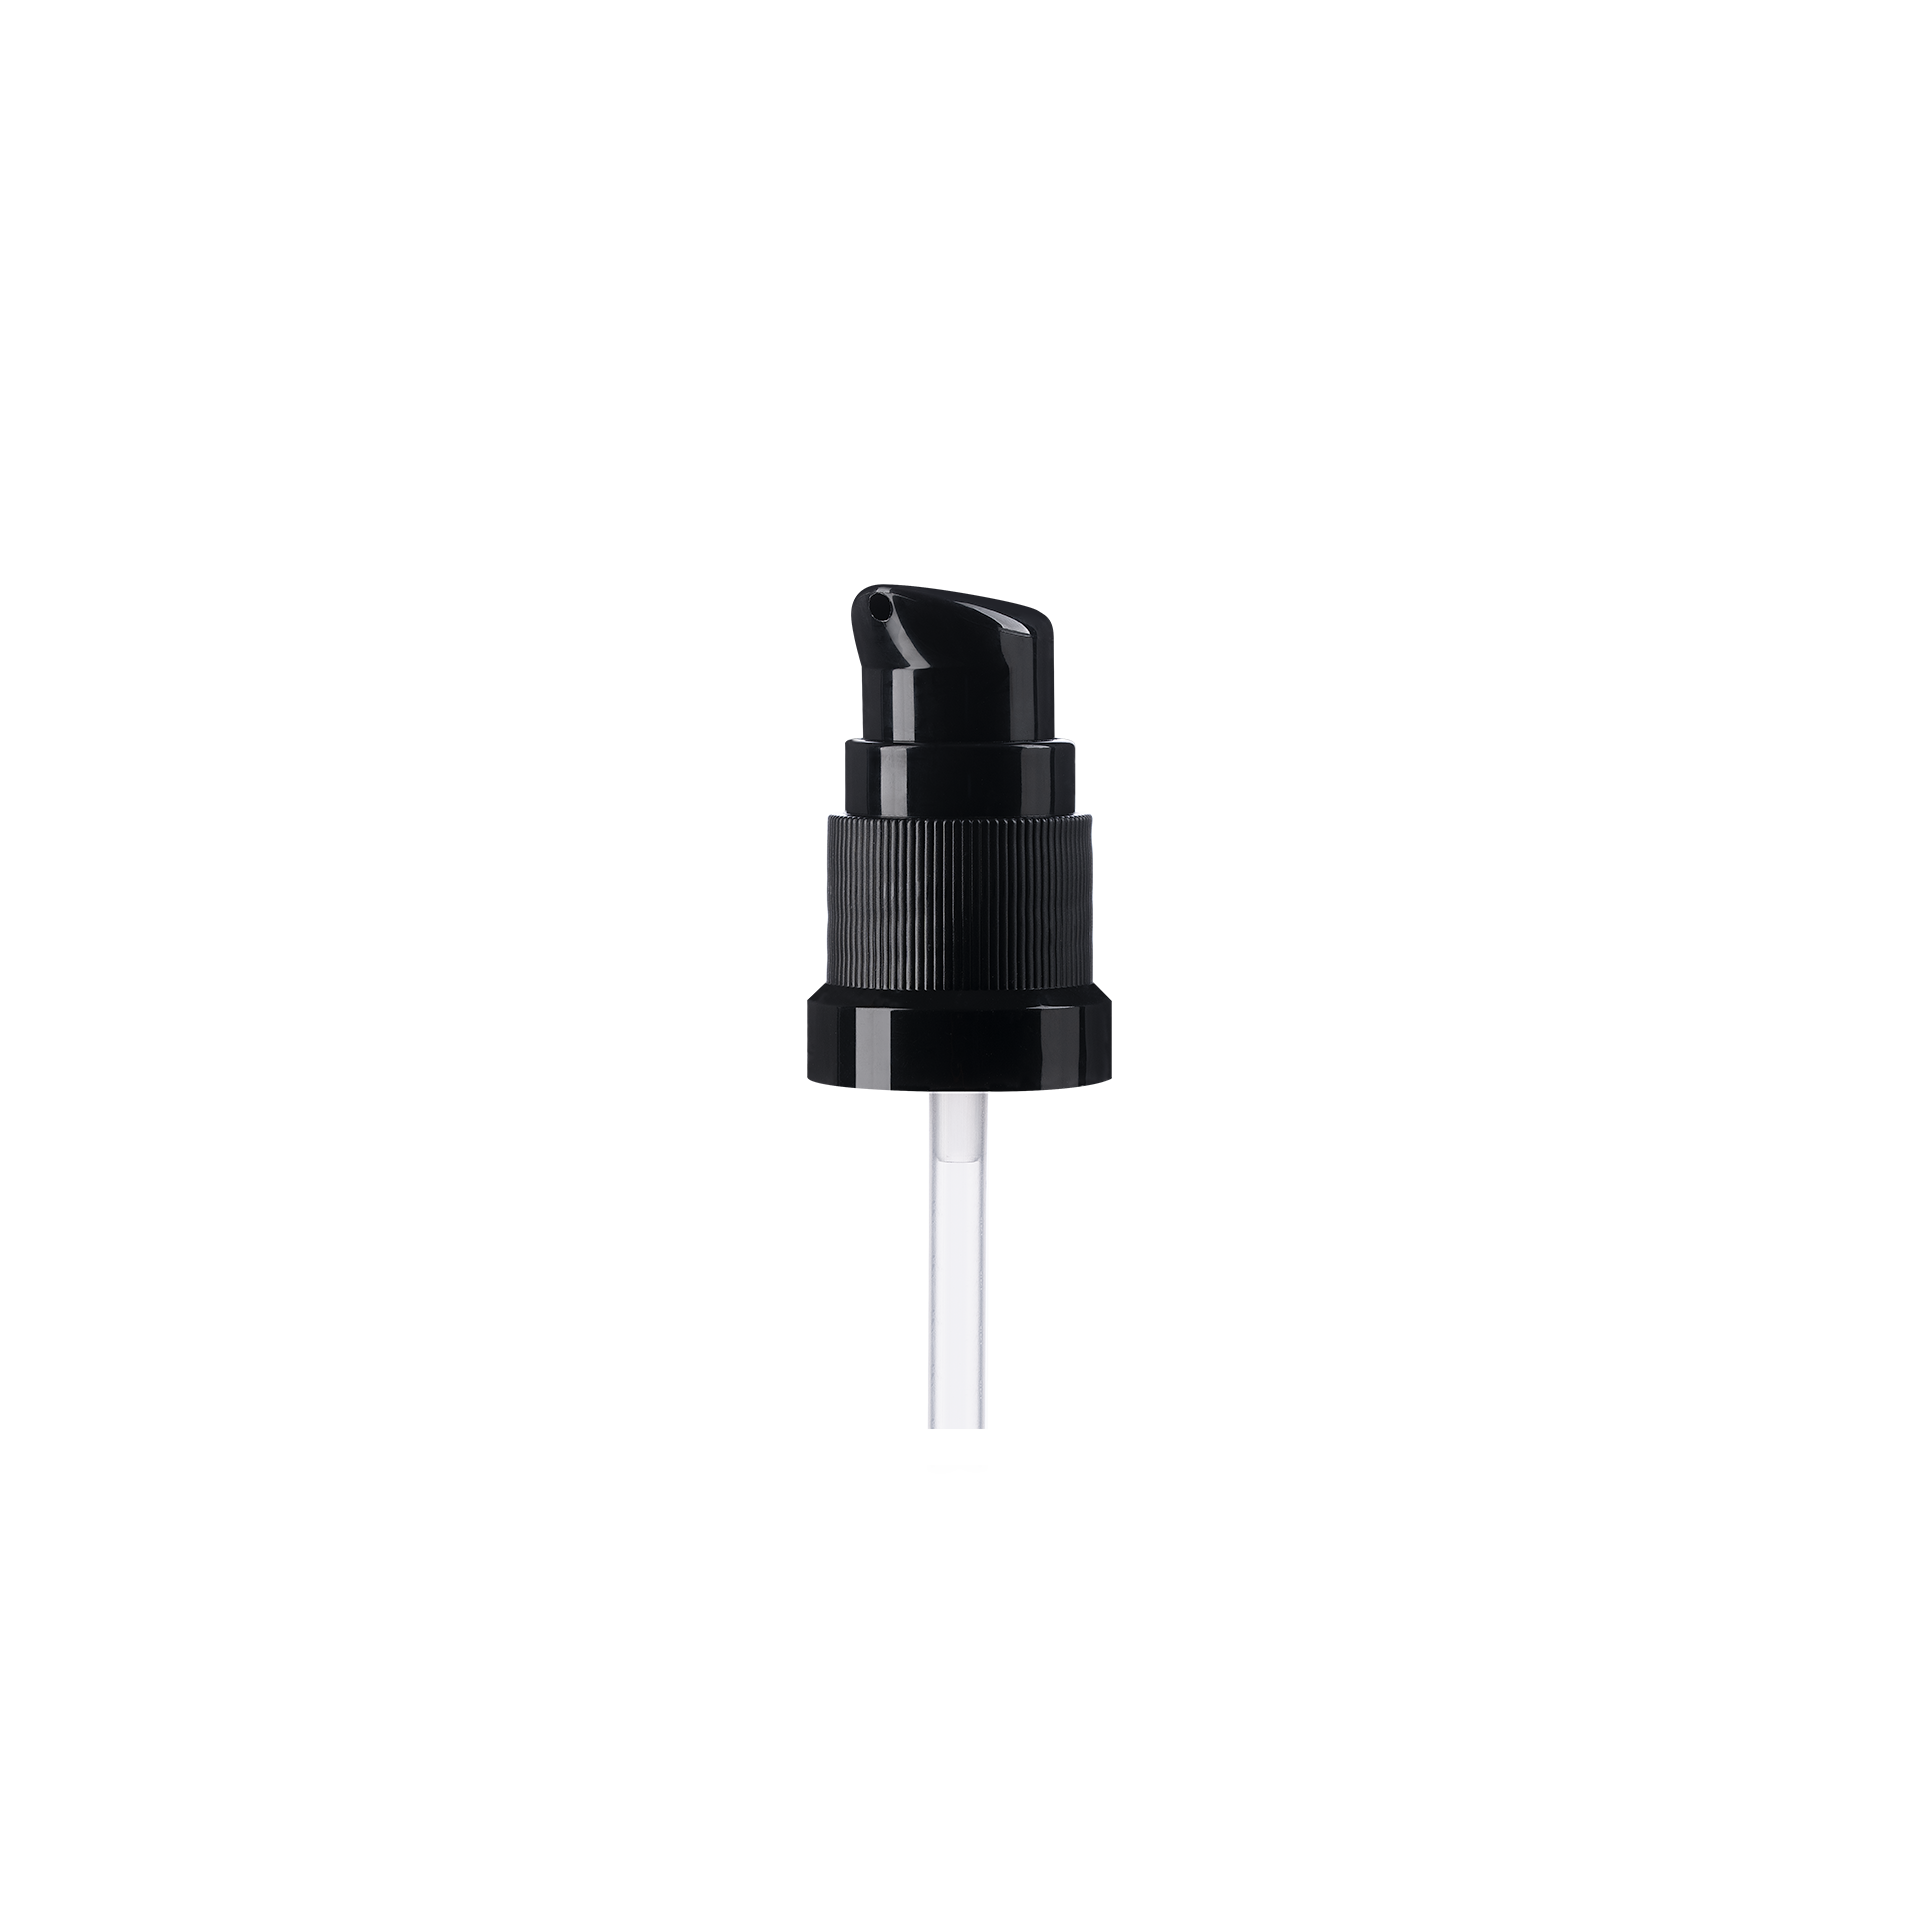 Lotion pump Metropolitan DIN18, PP, black, dose 0.15ml, black security clip (Ginger 10)